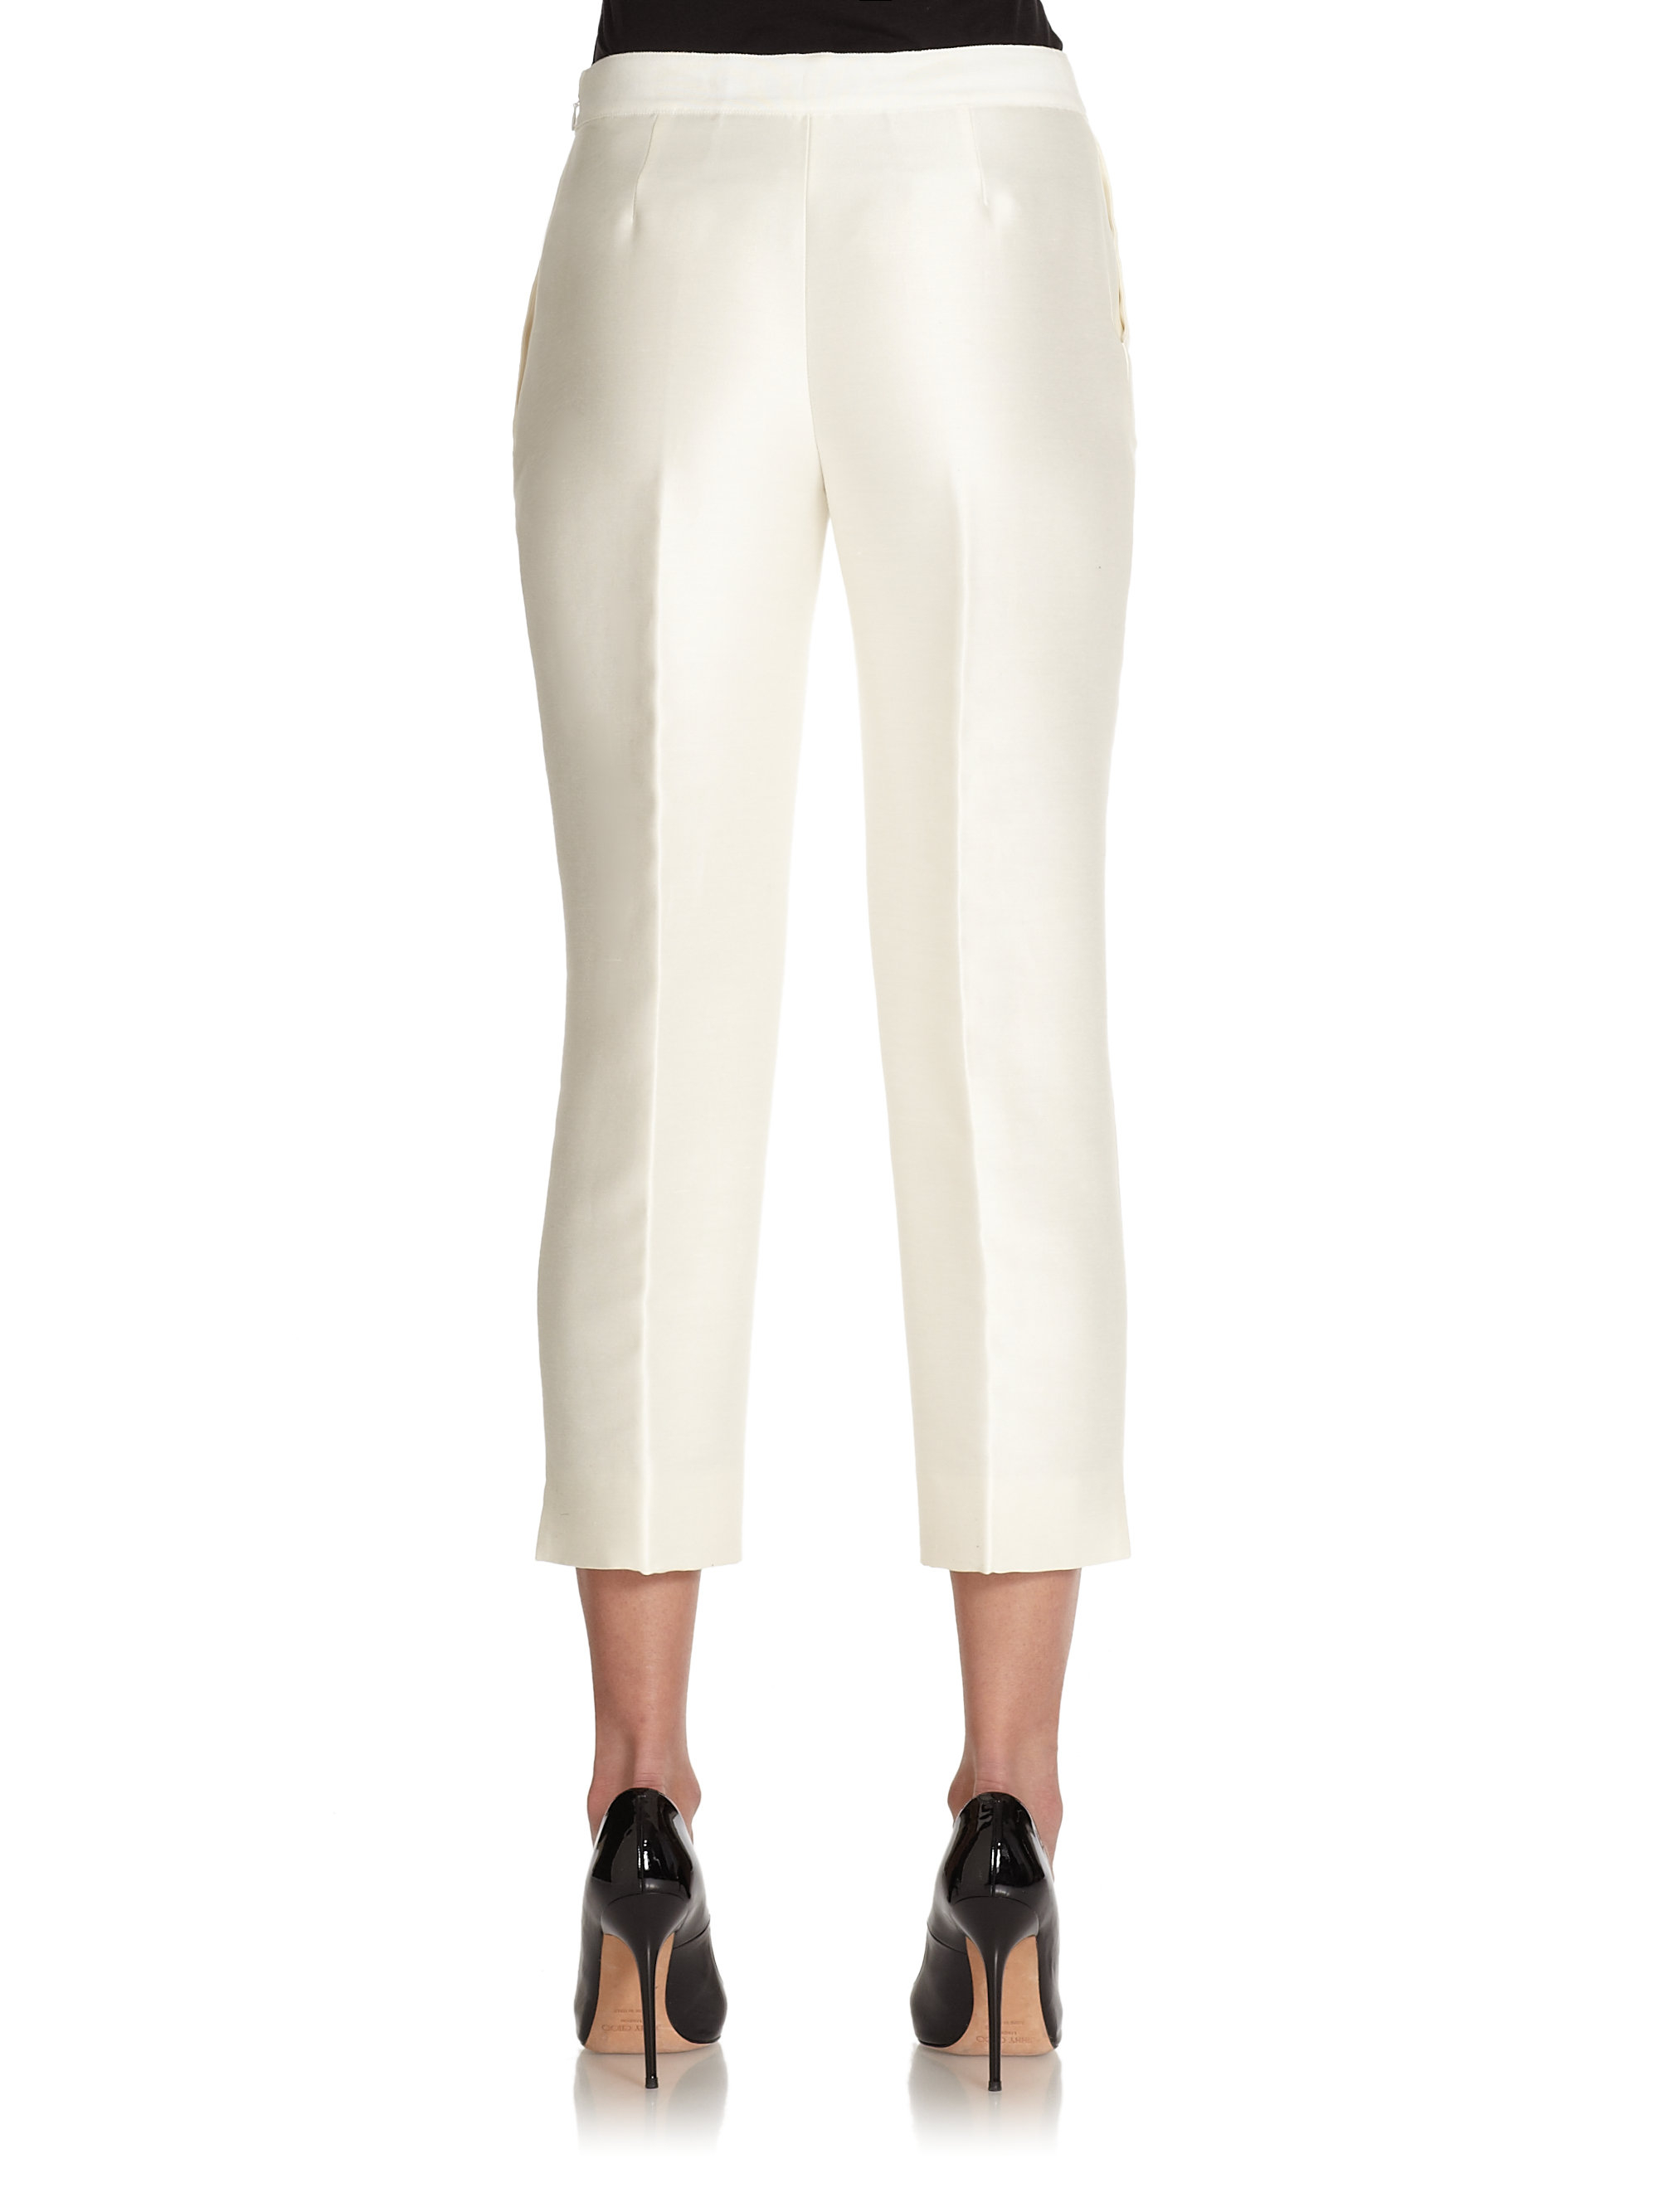 Carolina Herrera Cotton Silk Skinny Capri Pants in White - Lyst